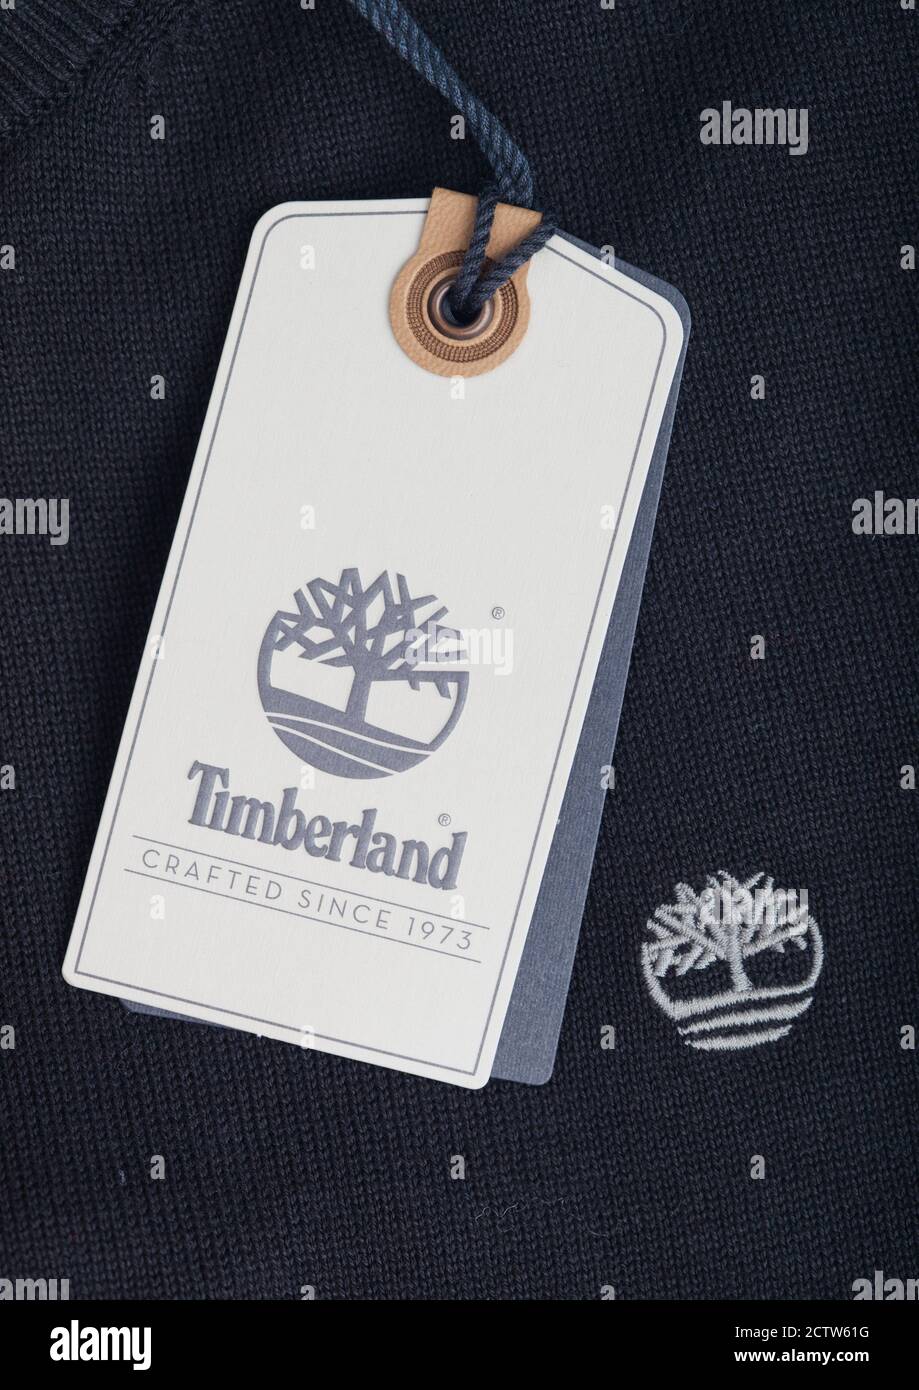 LONDON, UK - SEPTEMBER 09, 2020:Timberland logo and clothing tag on black  cotton fabric Stock Photo - Alamy